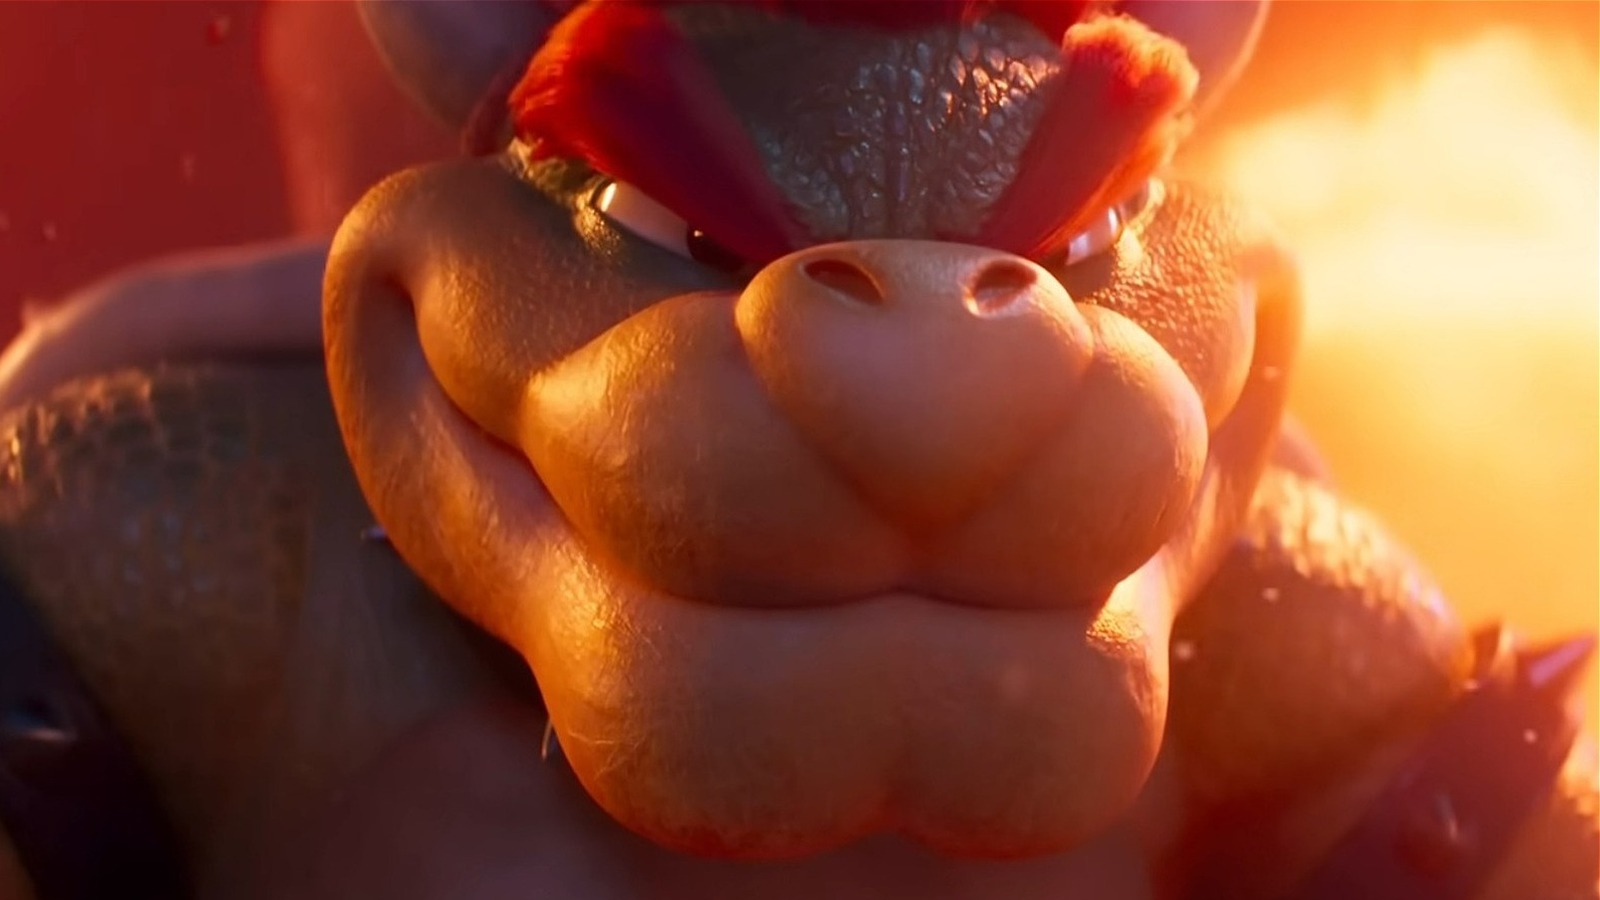 The Super Mario Bros. Movie 2: Bowser Actor Jack Black Talks About